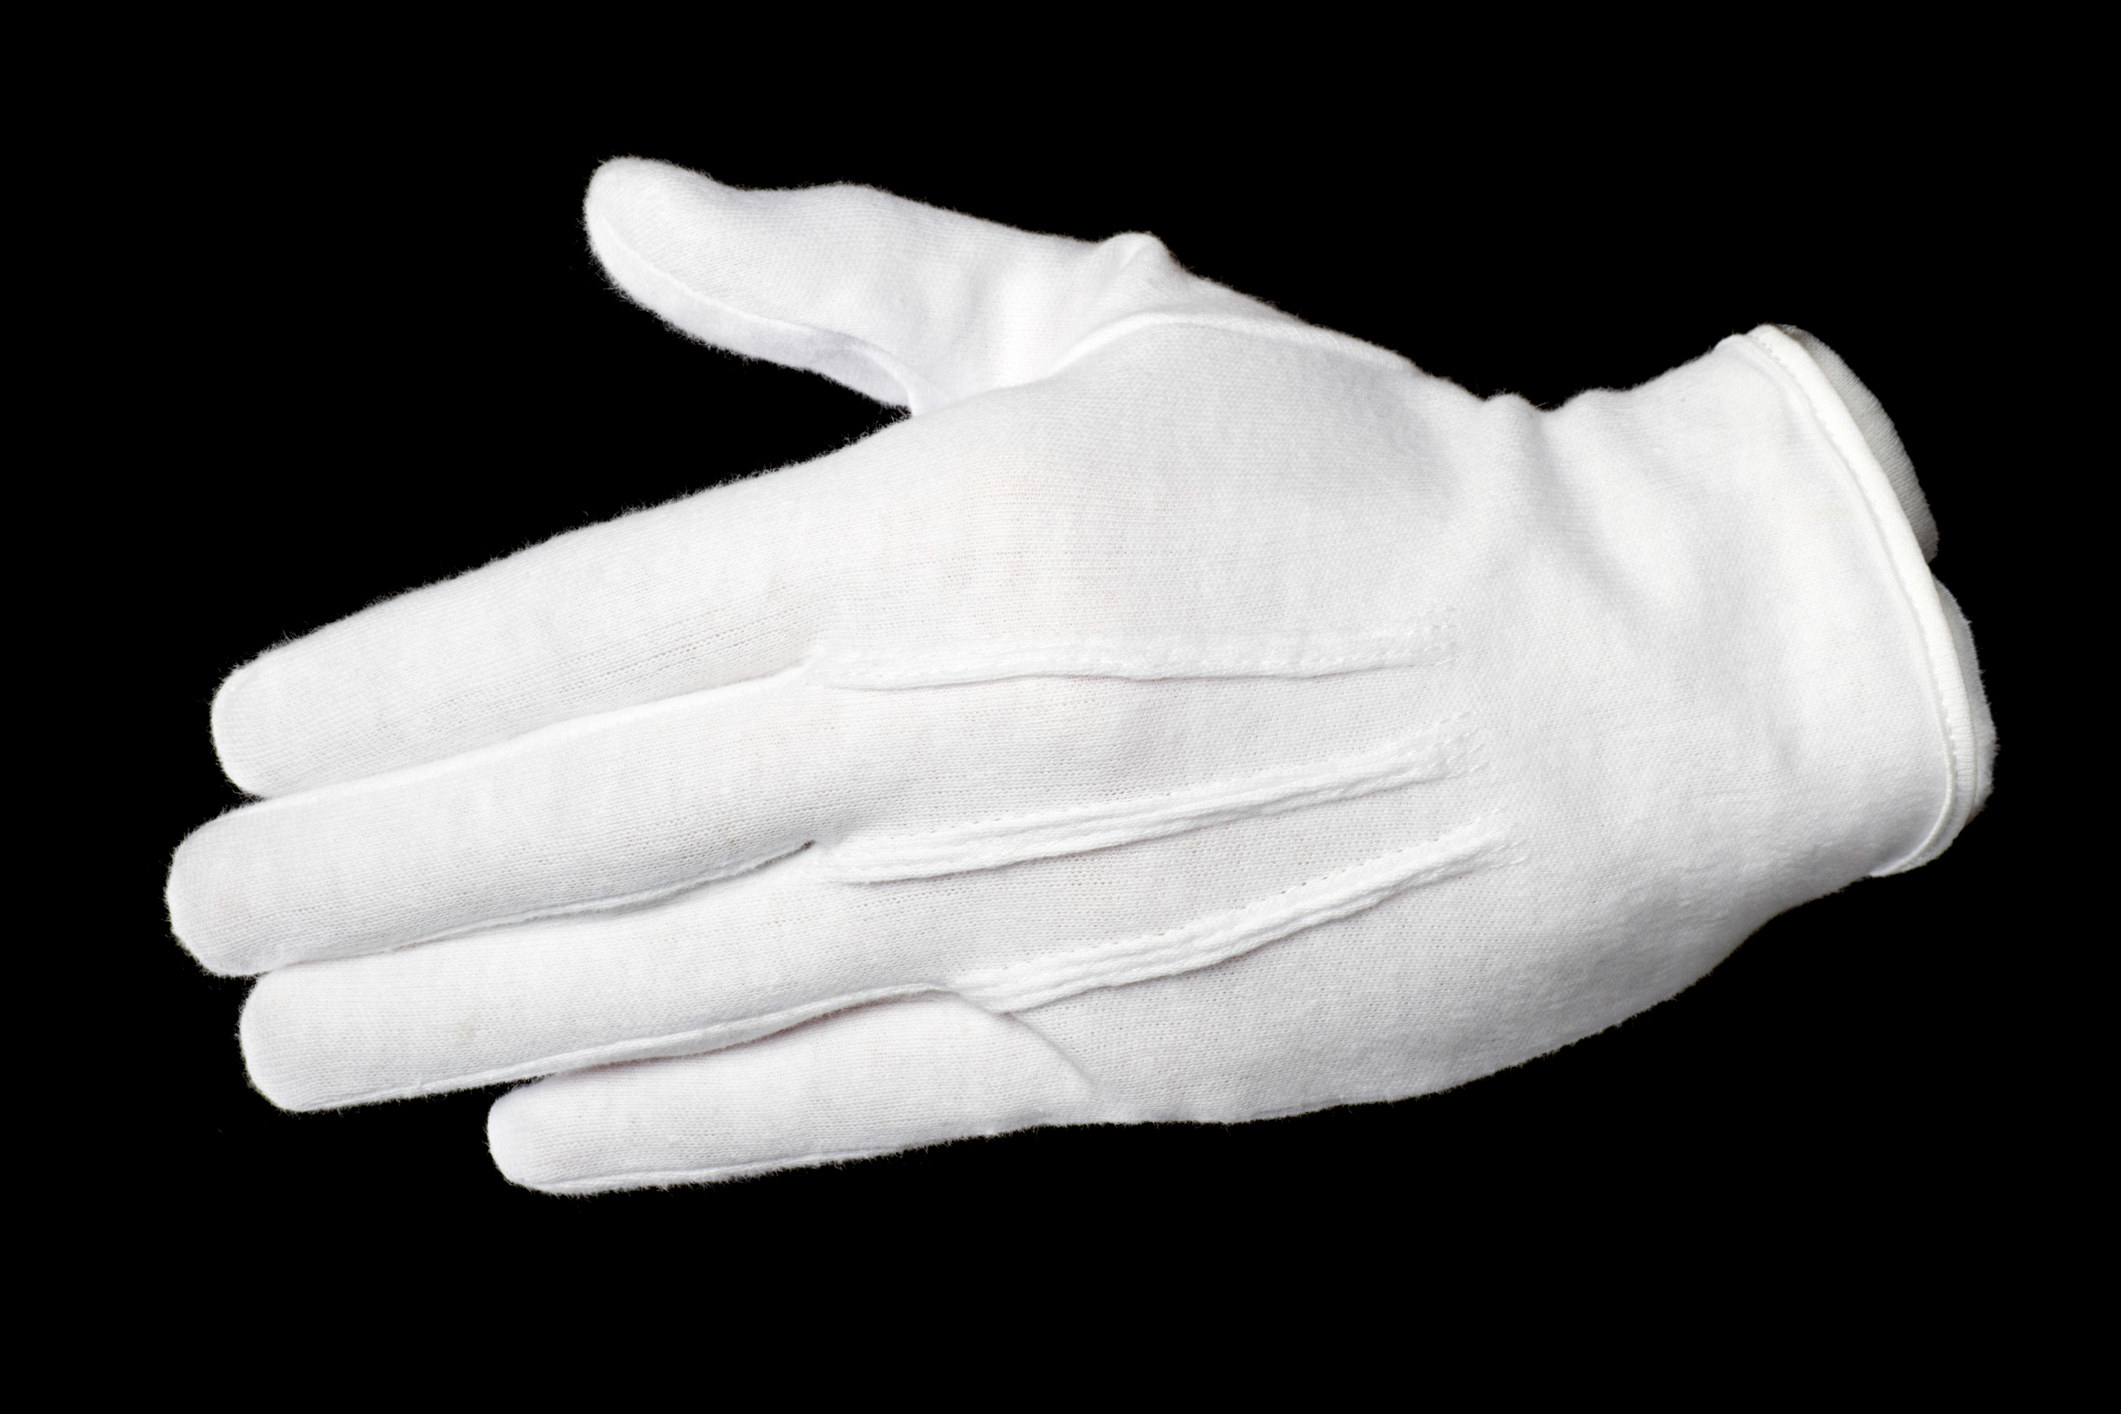 A white glove against a black background